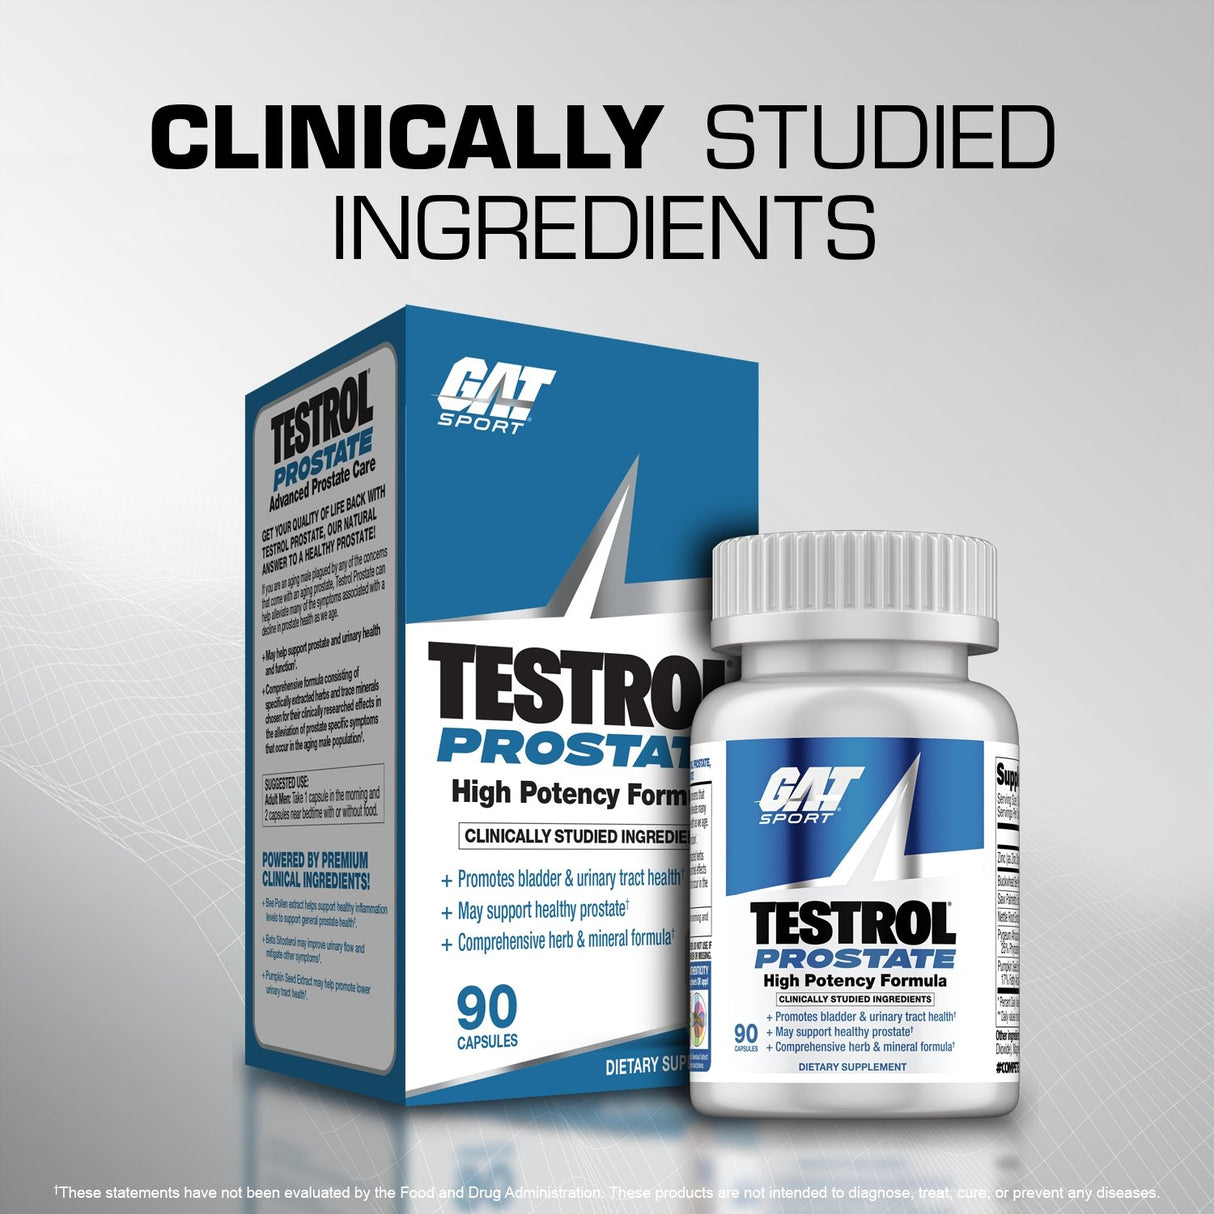 GAT SPORT Testrol Prostate - clinically studied ingredients